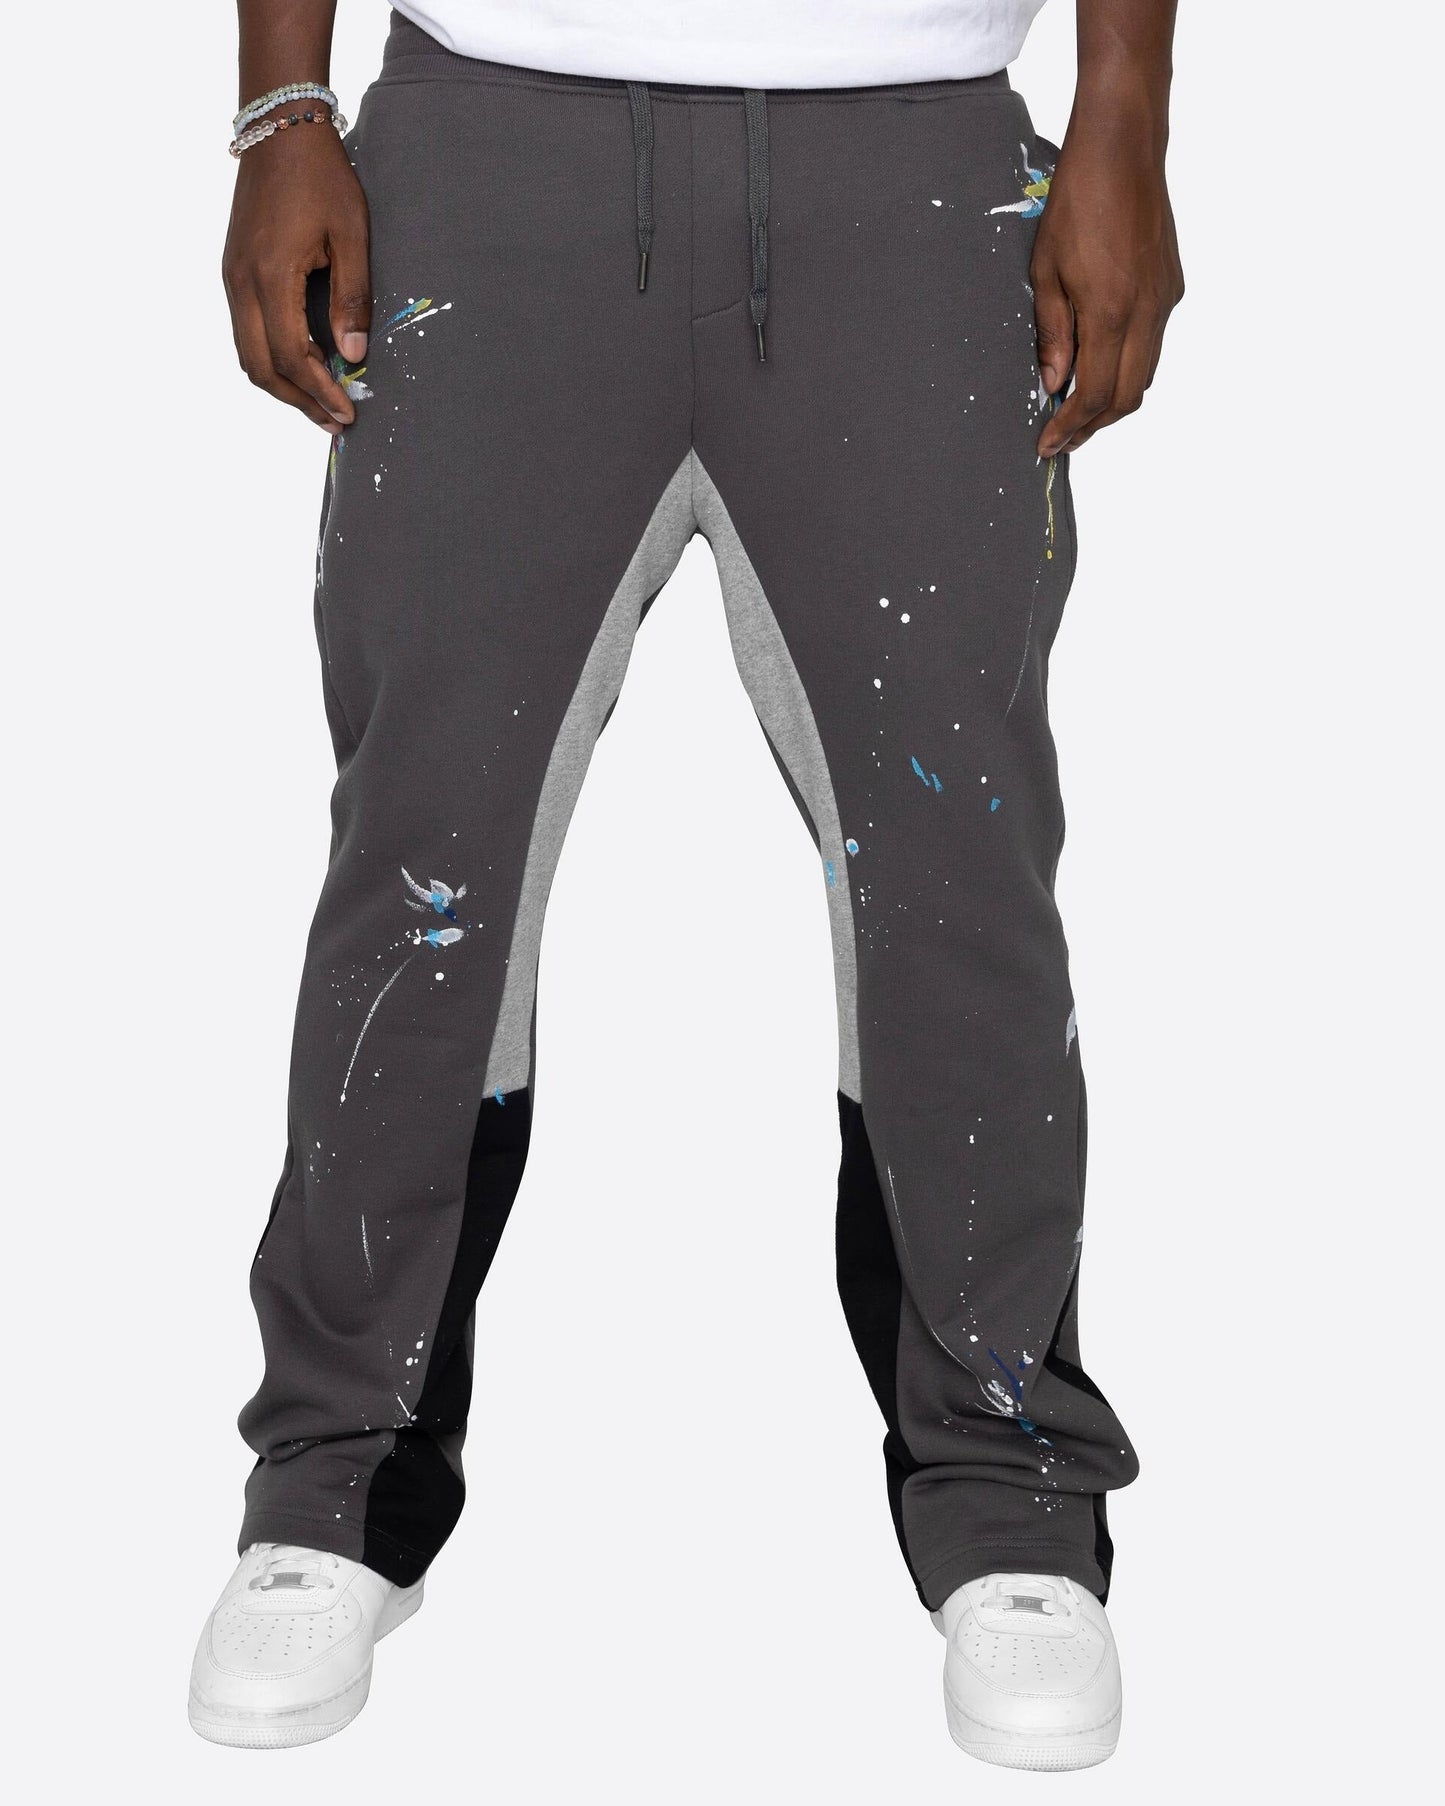 EPTMShowroom Sweatpants (Charcoal)